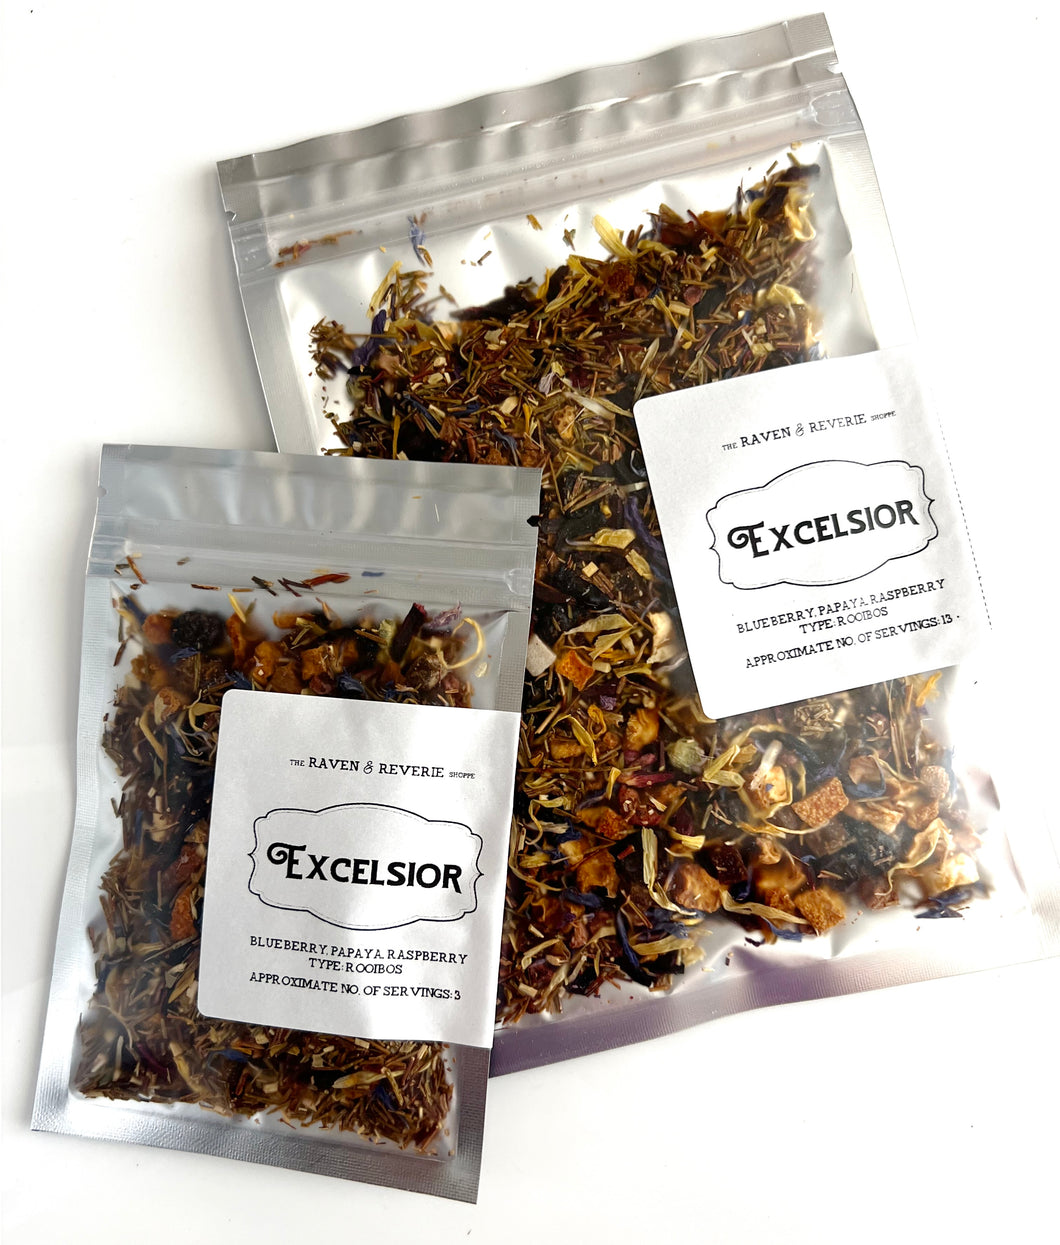 Excelsior - blueberry, papaya, raspberry rooibos loose leaf tea